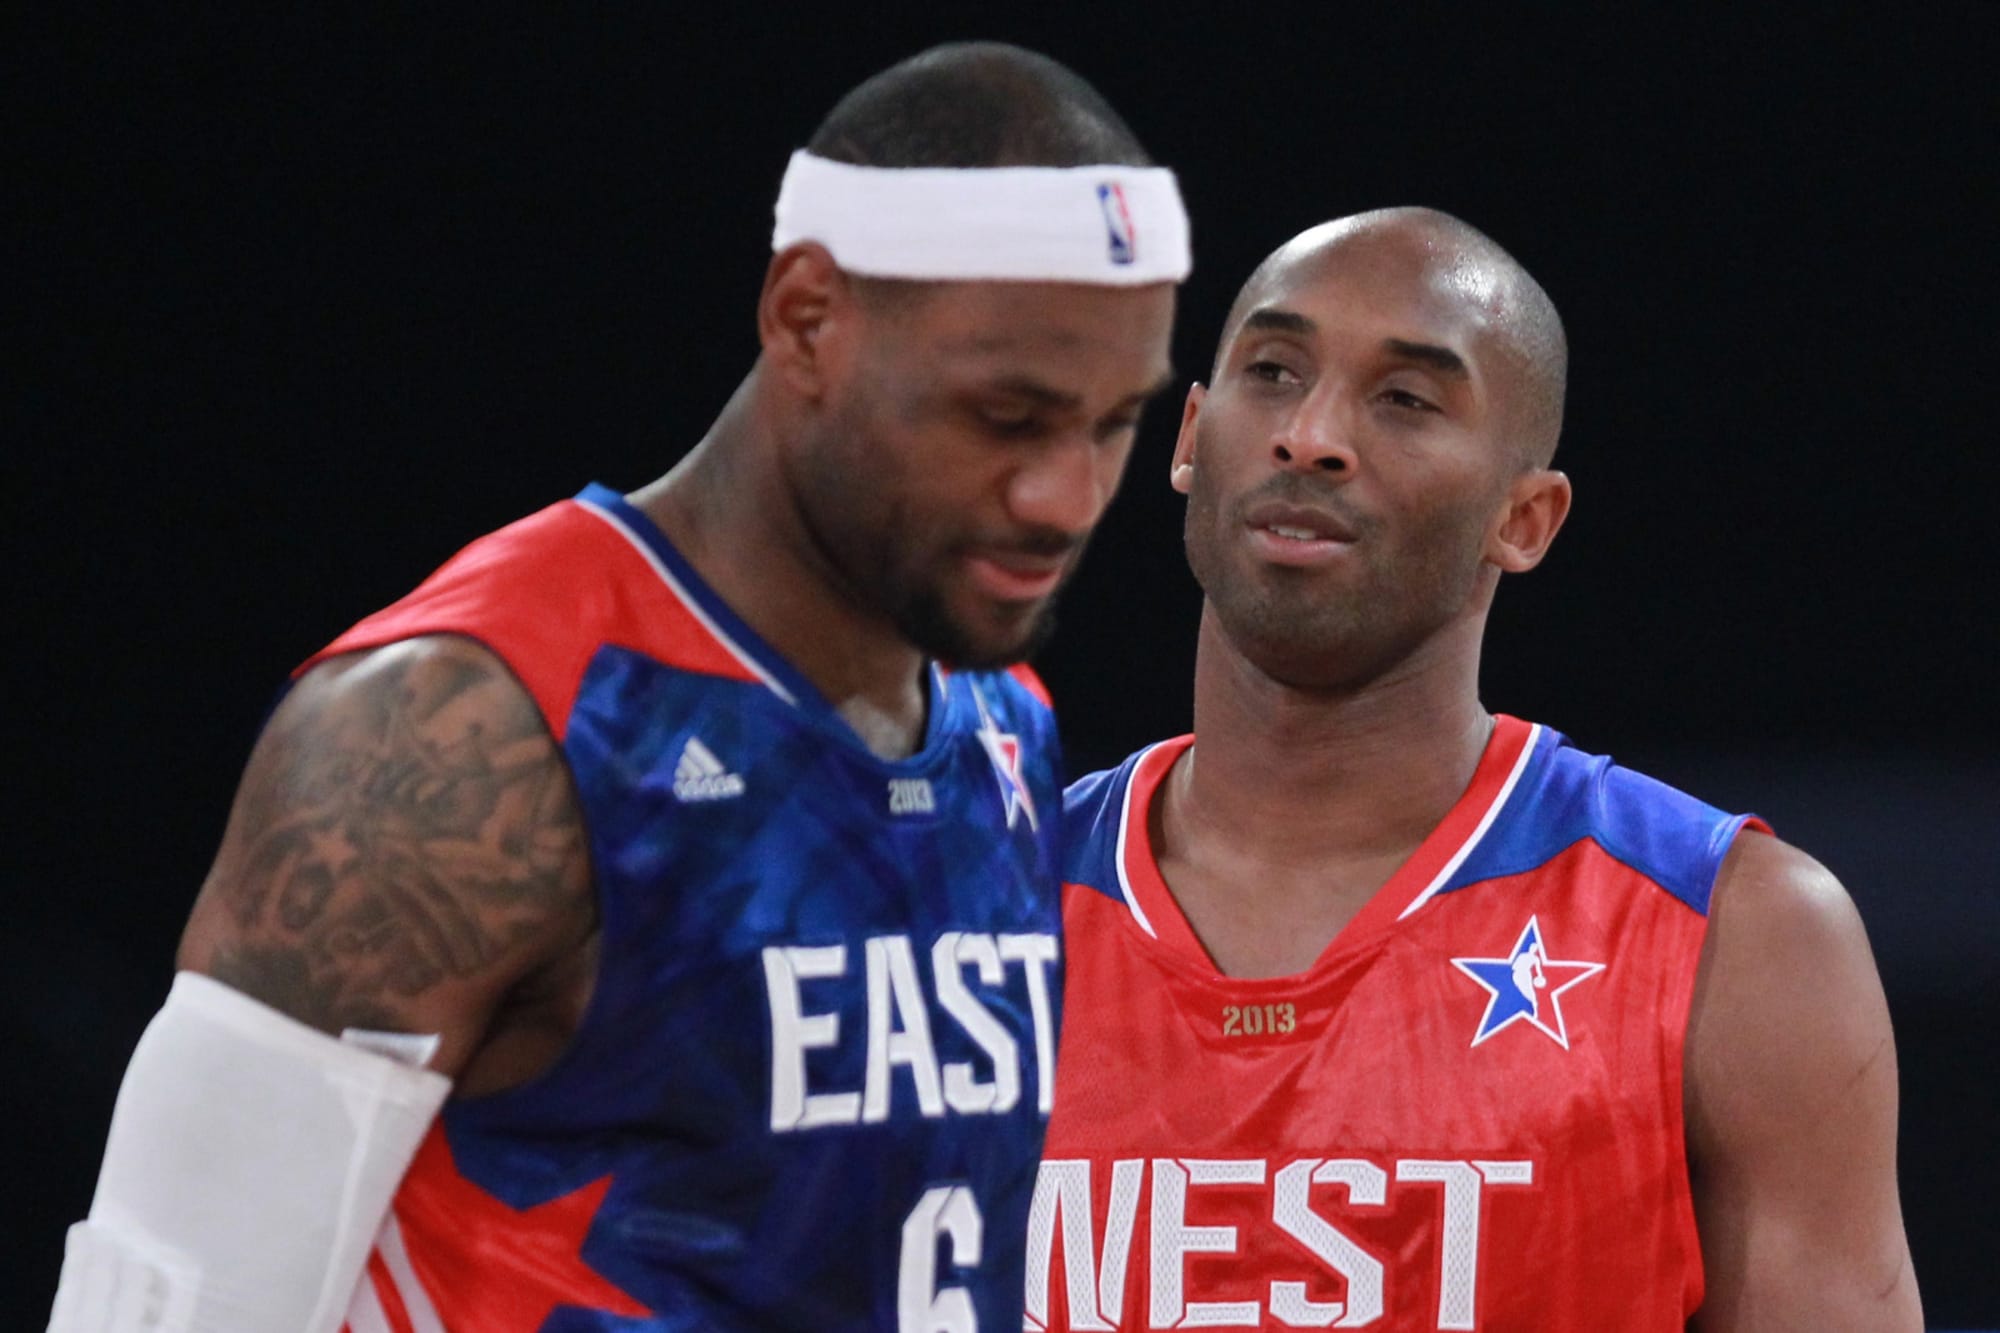 Whose NBA career is better? Kobe Bryant vs. LeBron James